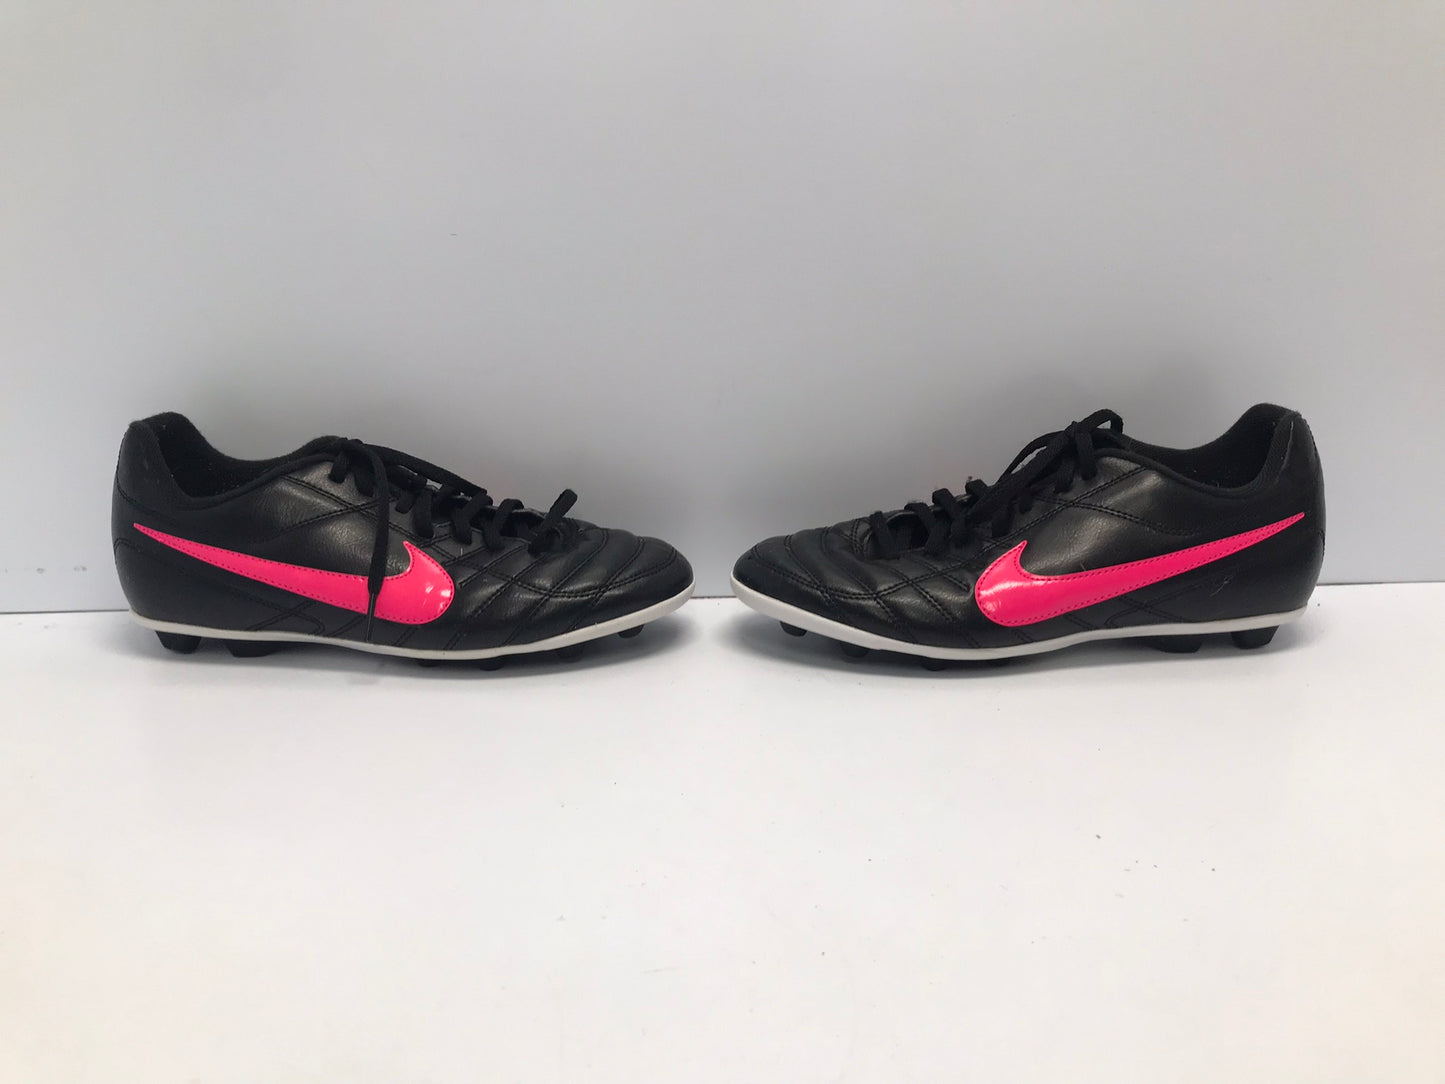 Soccer Shoes Cleats Men's Size 6 Adidas Black Fushia Pink Excellent